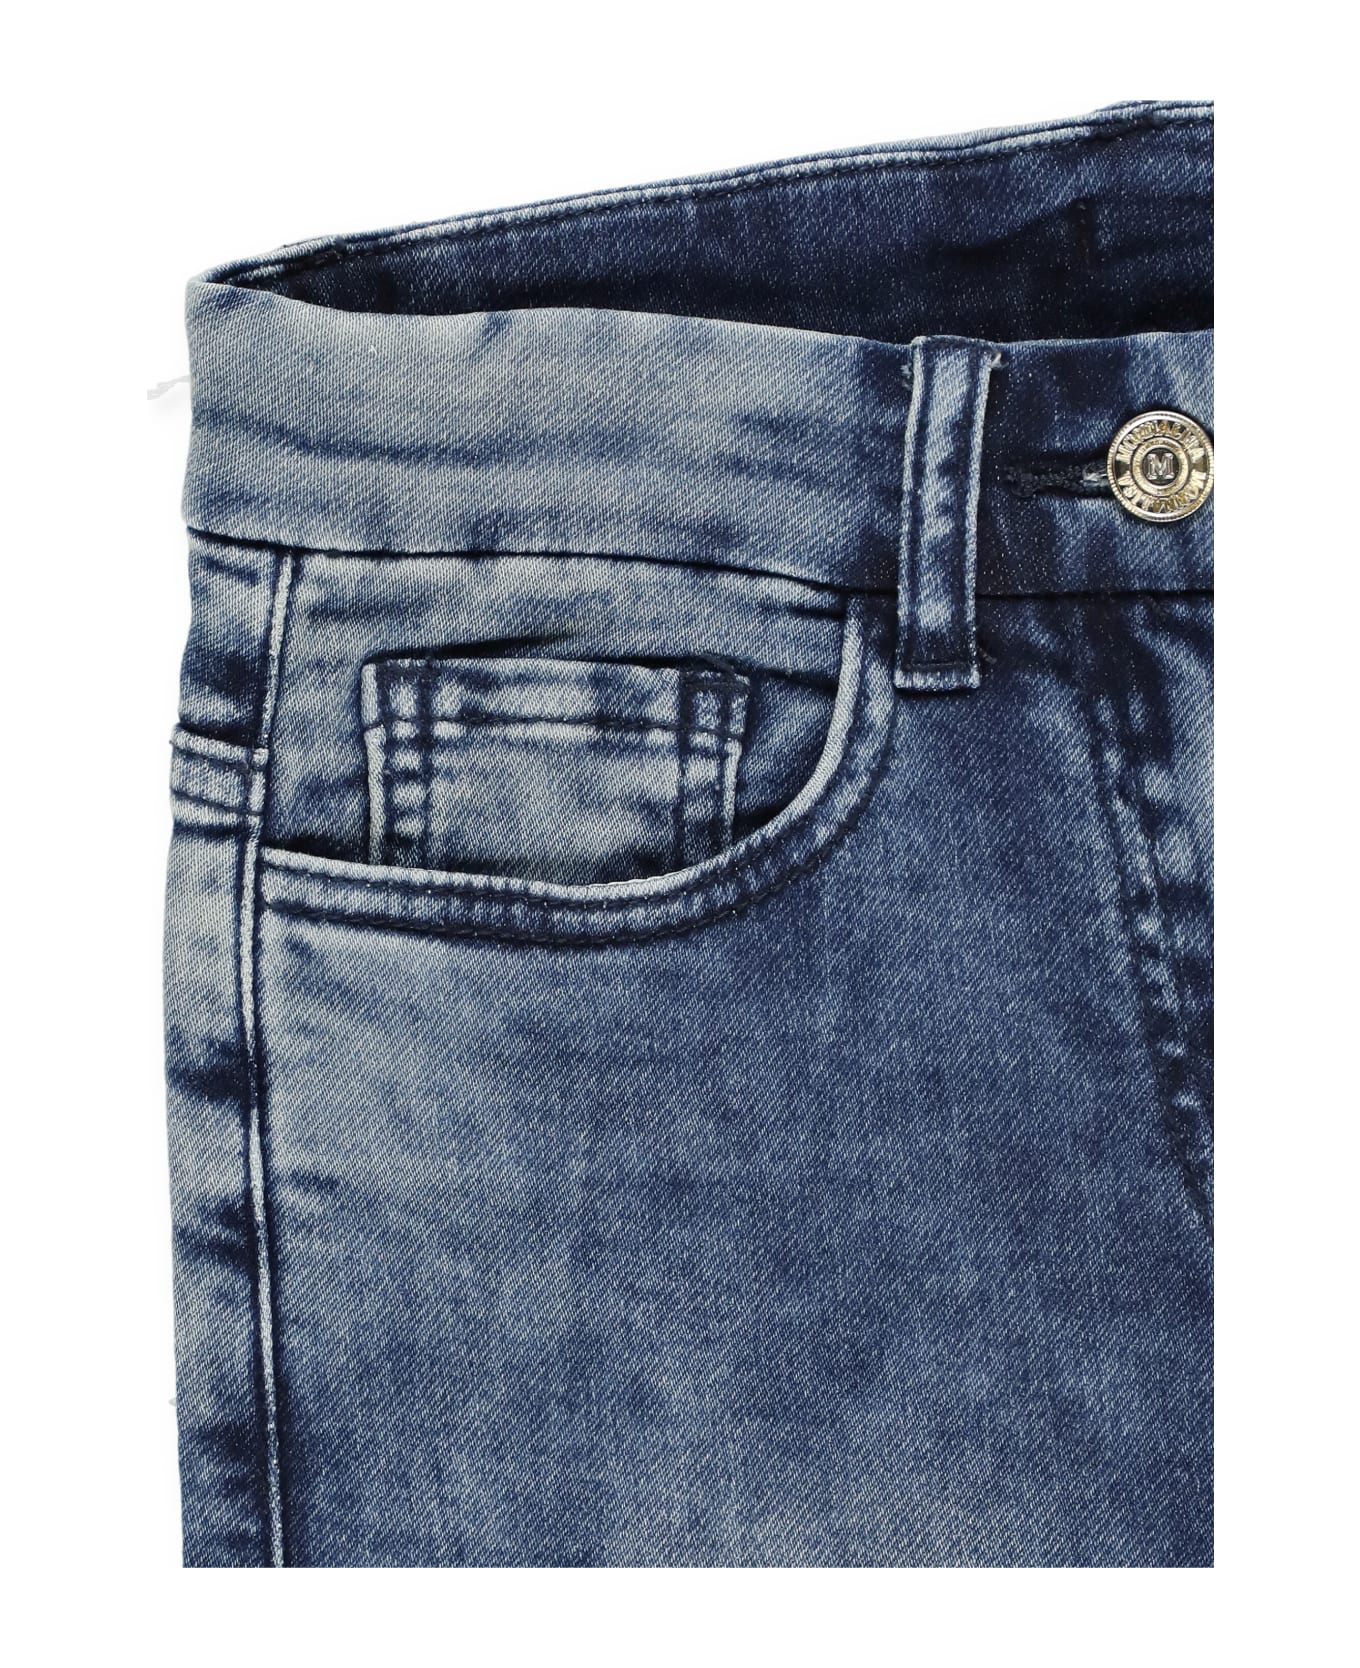 Monnalisa Cotton Jeans - DENIM BLUE ボトムス